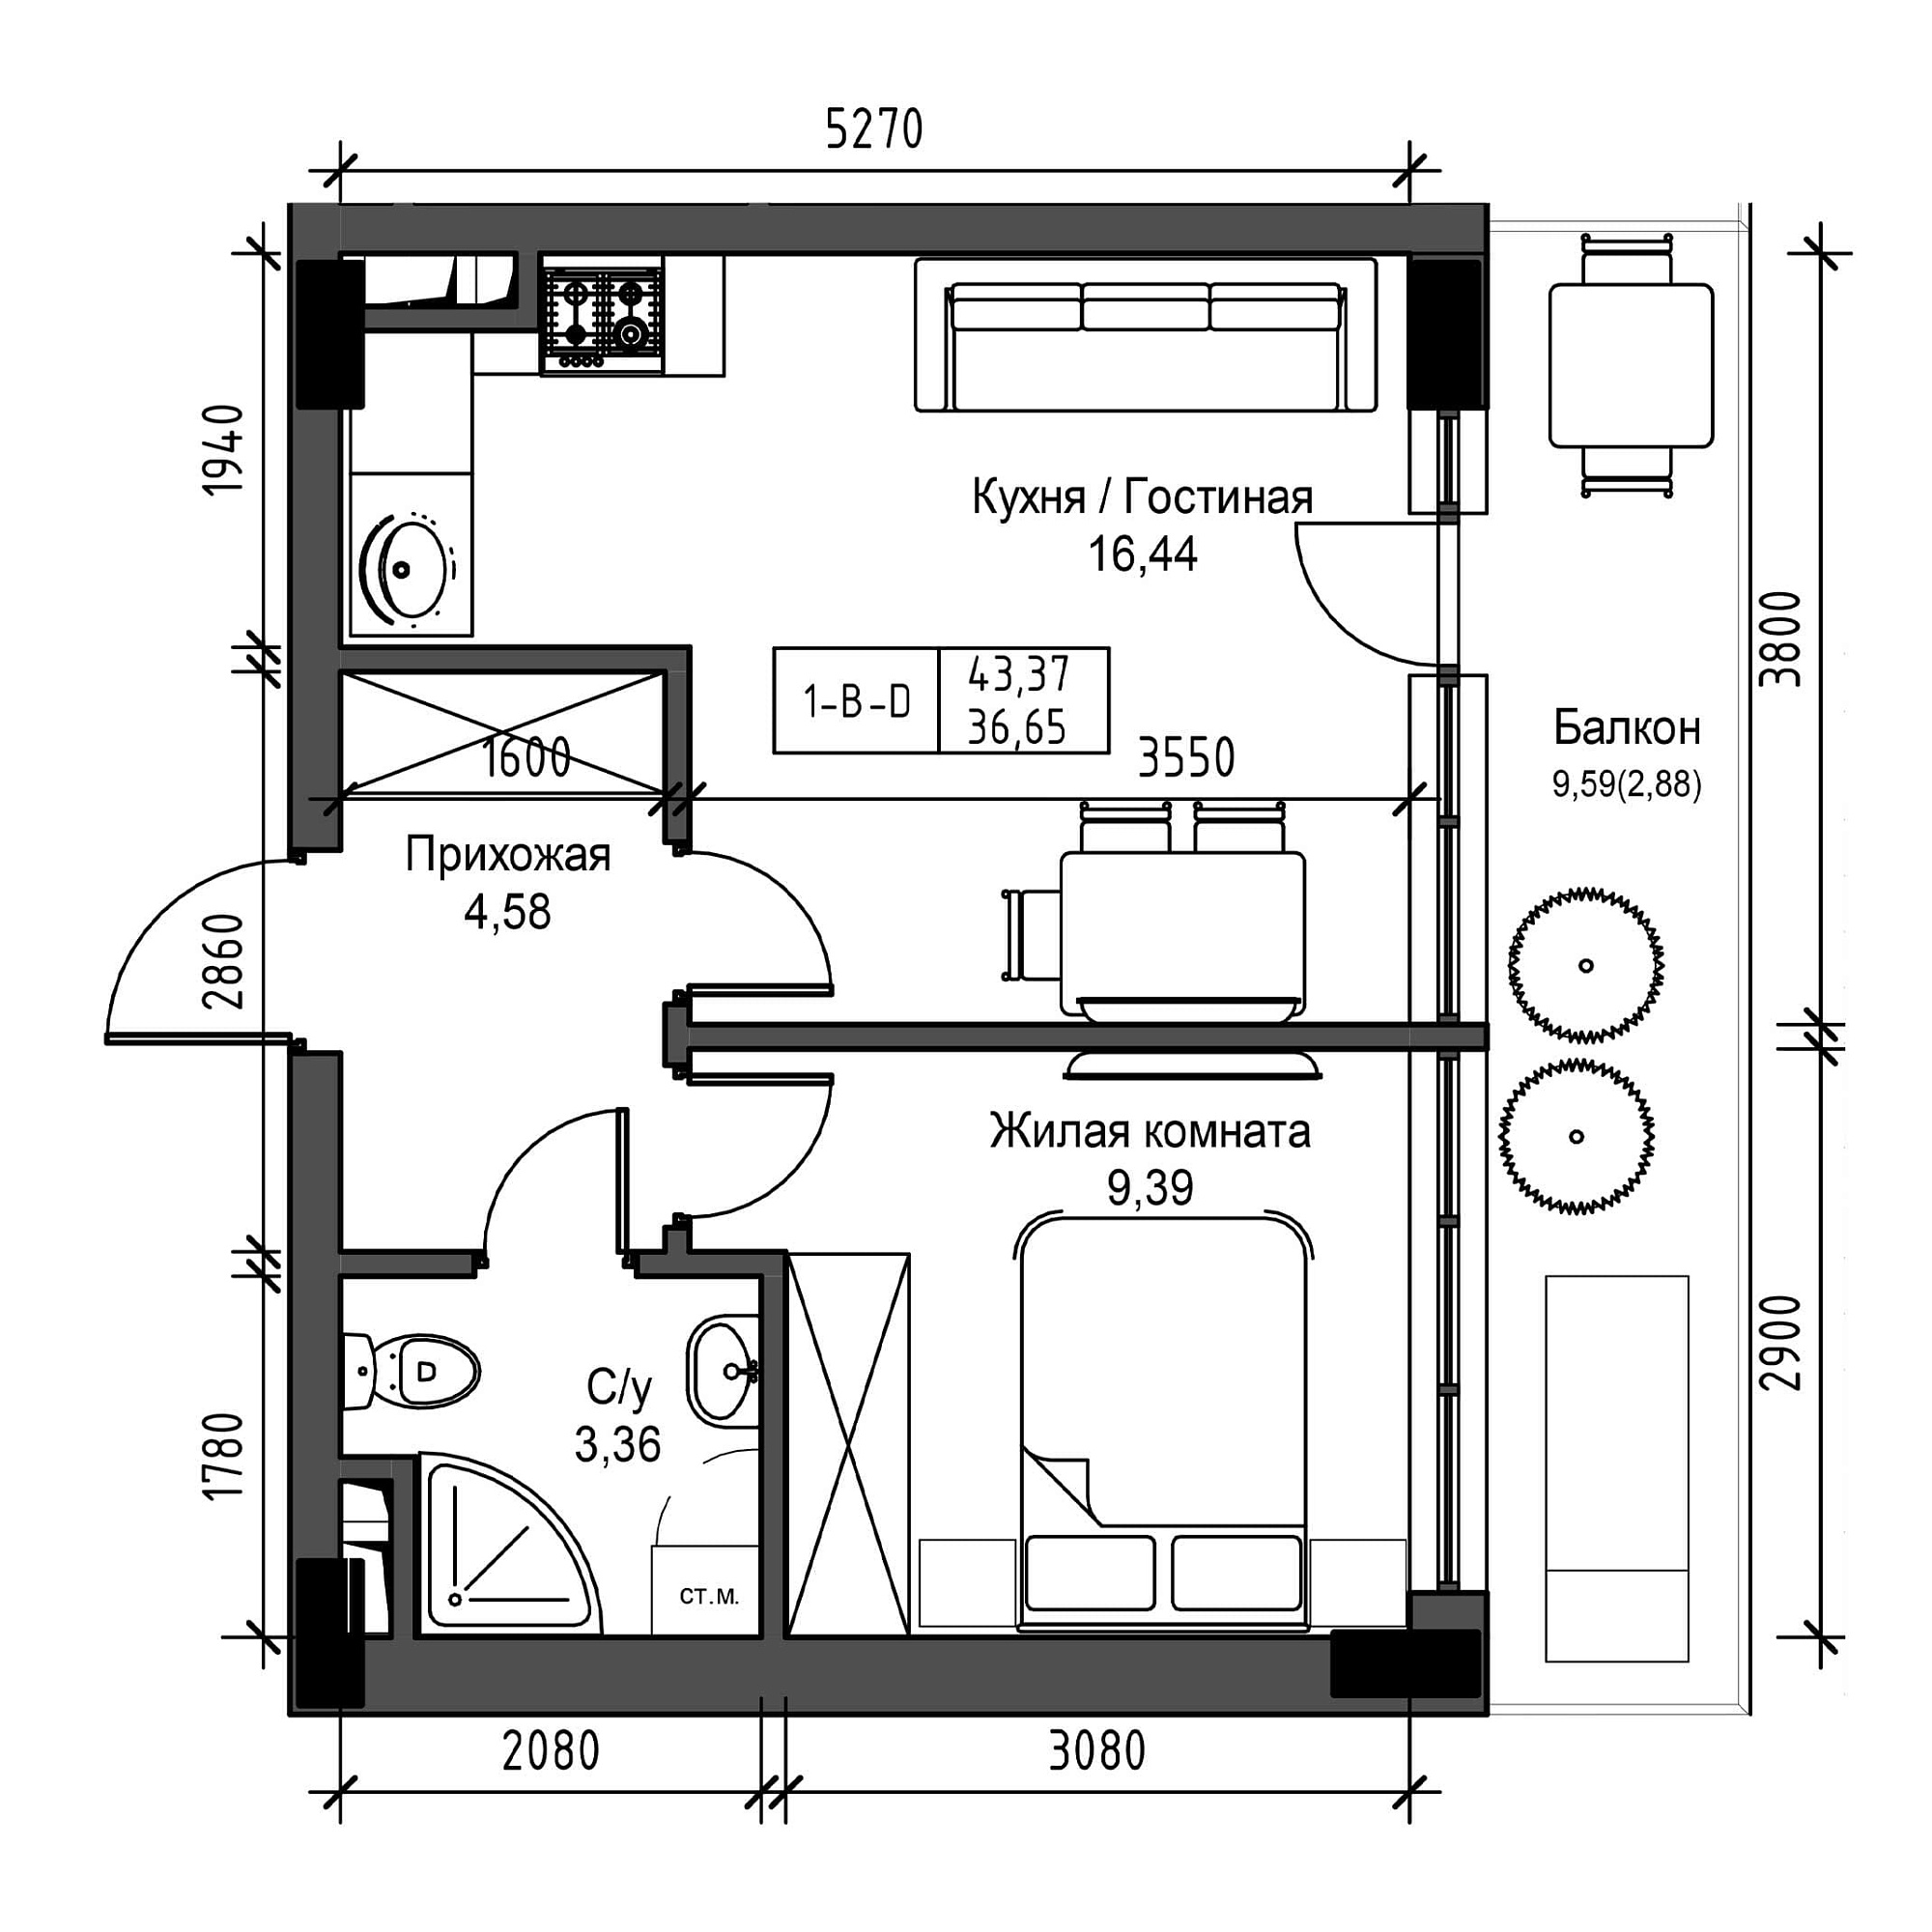 Планування 1-к квартира площею 36.65м2, UM-001-09/0002.